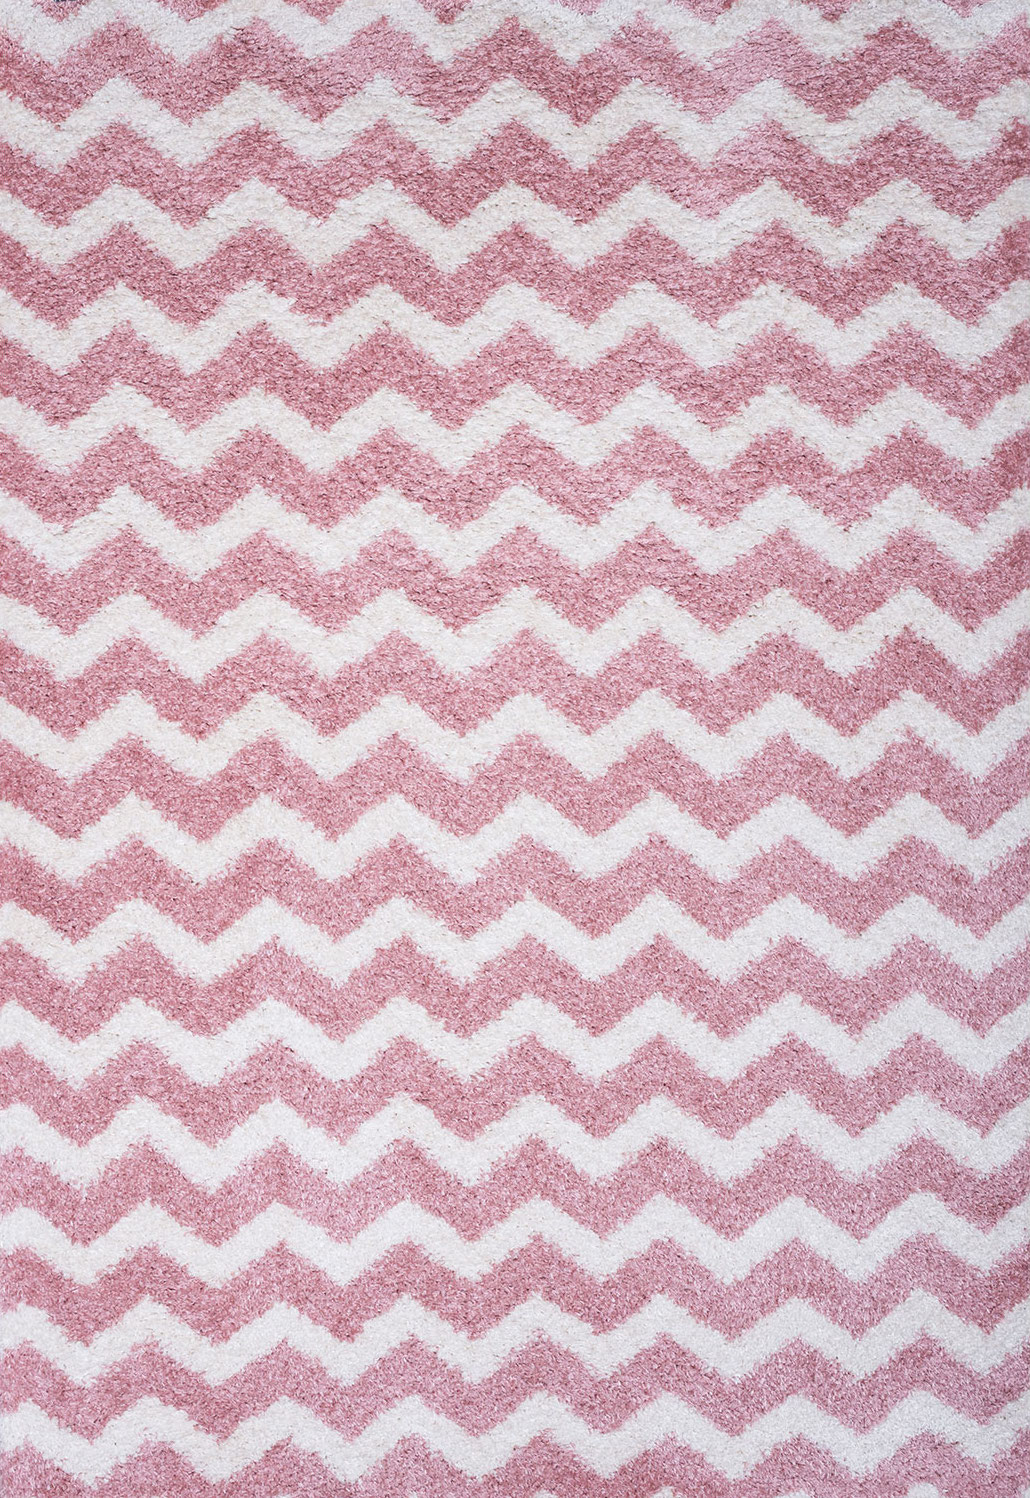 Shaggy παιδικό χαλί Cocoon 8396/55 ροζ με ζικ ζακ ρίγες - ΡΟΤΟΝΤΑ  1,60x1,60 Colore Colori